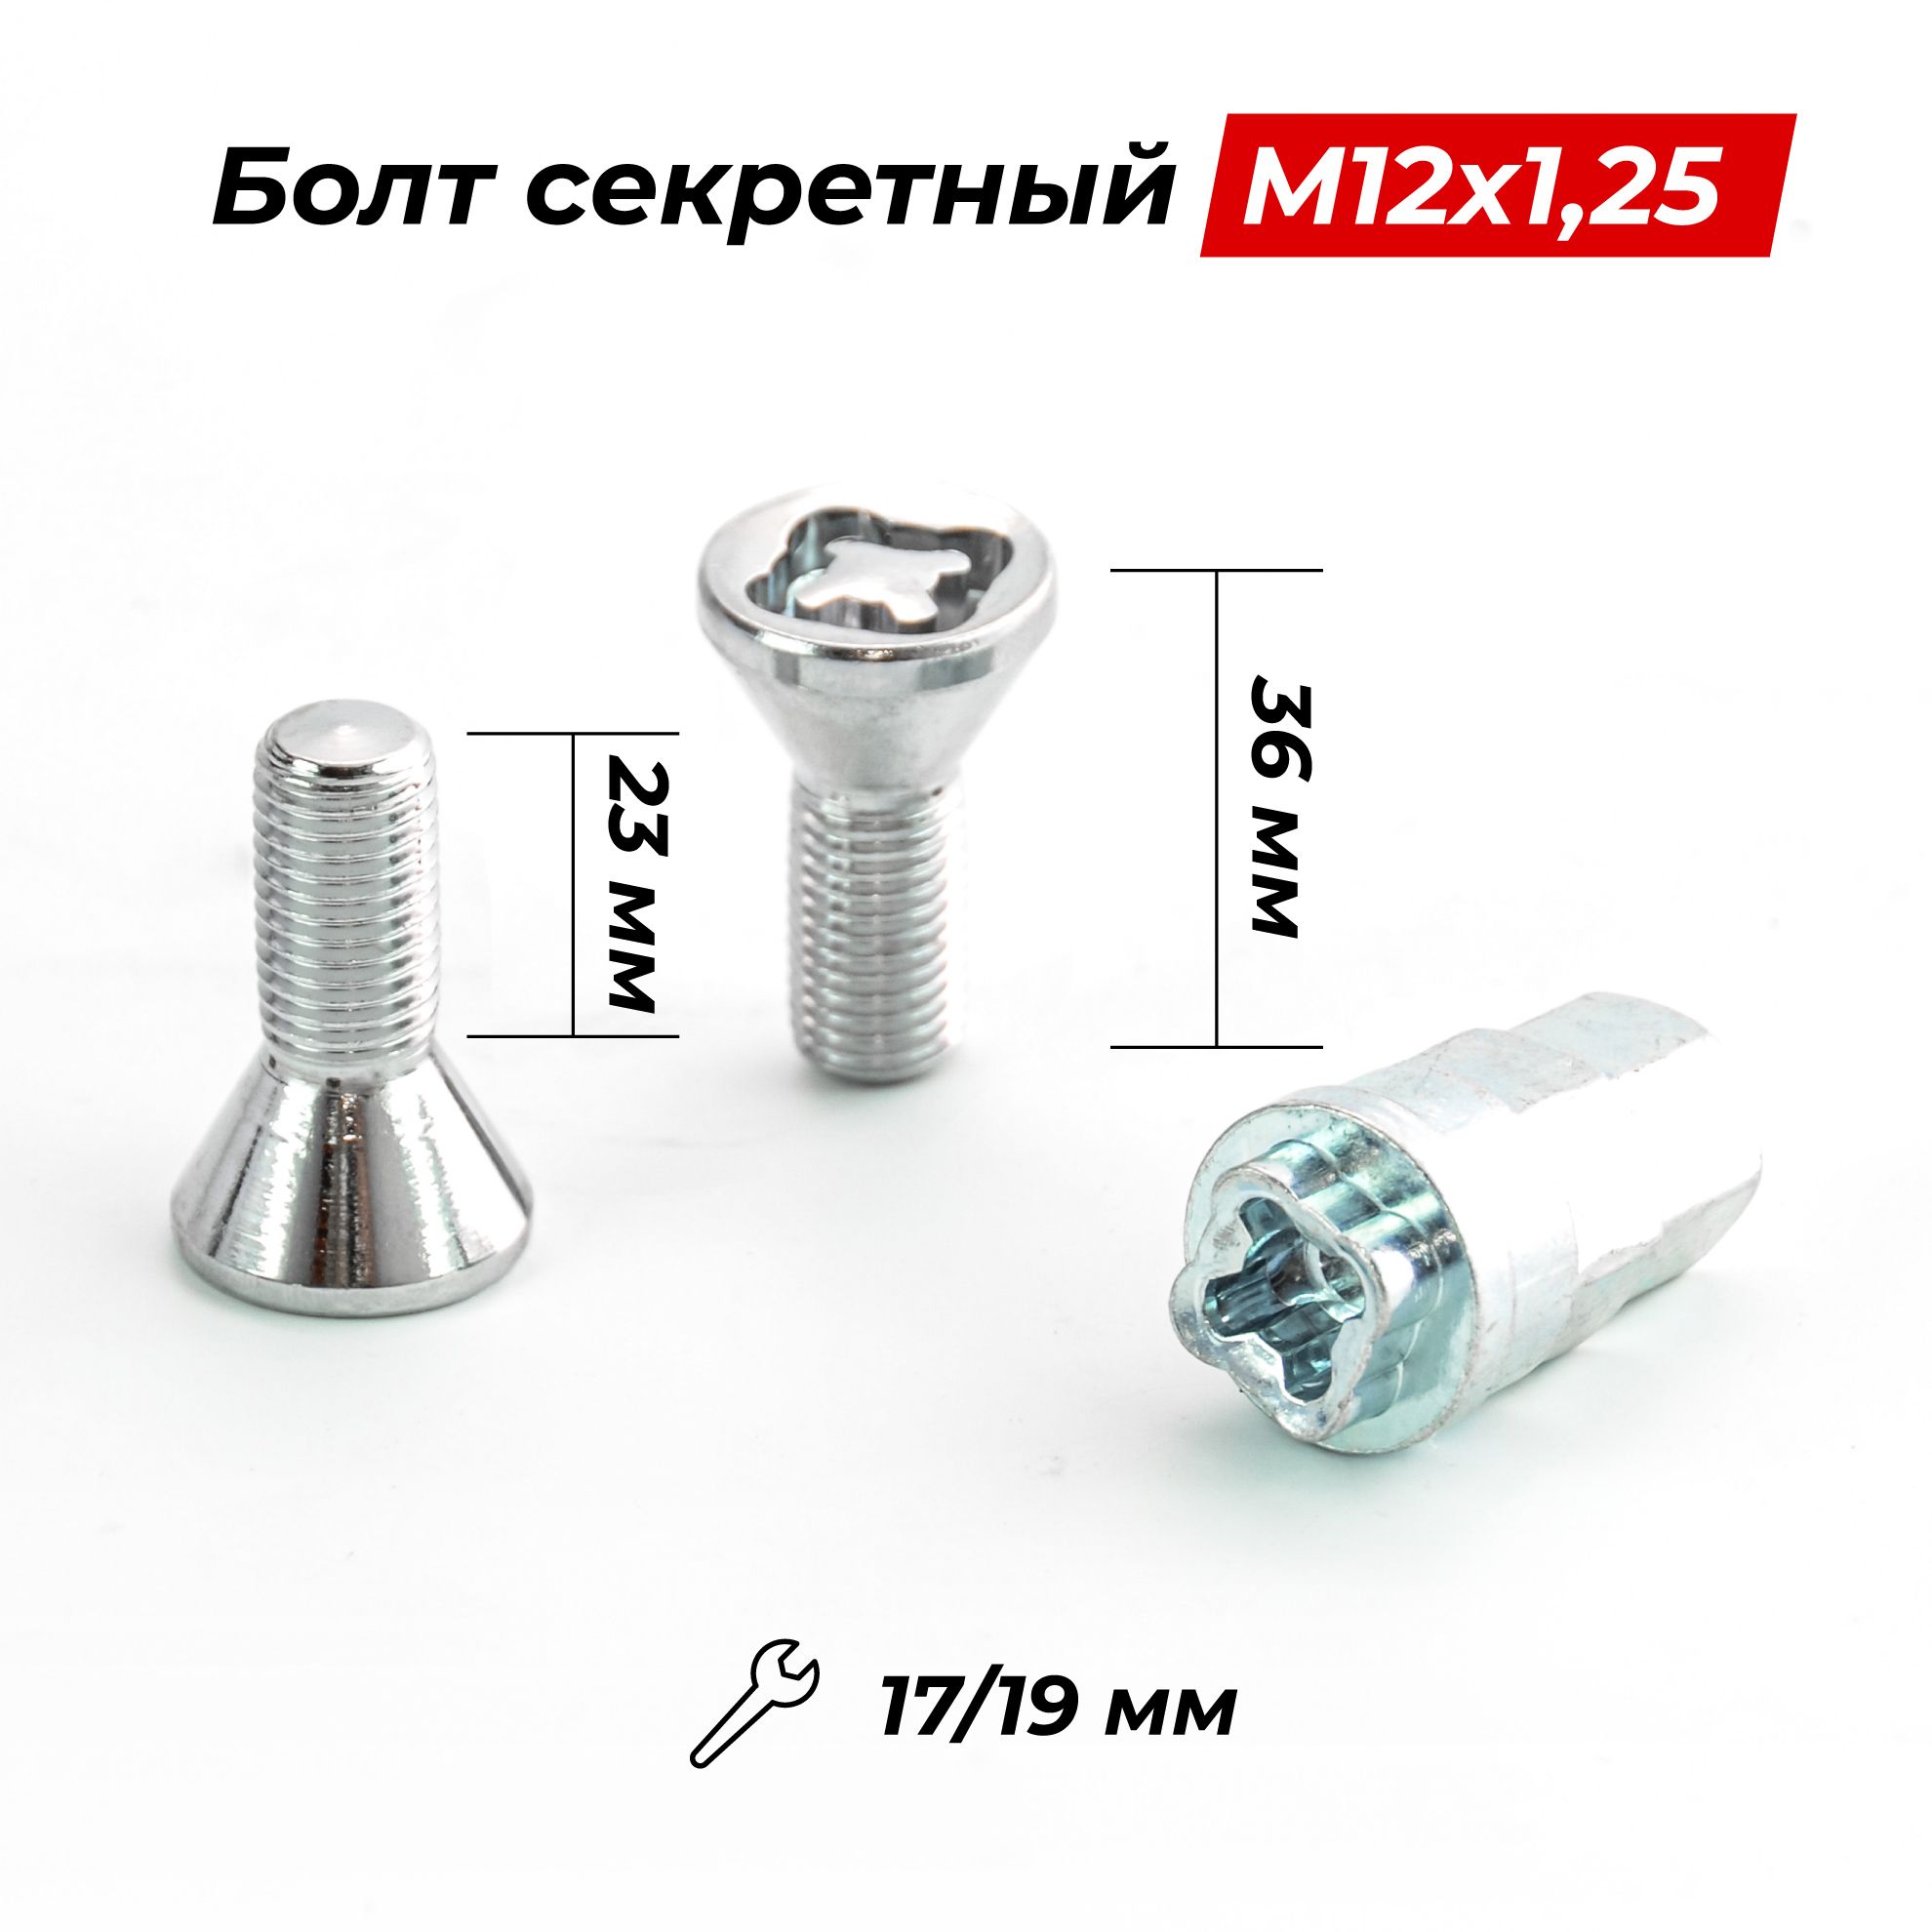 БолтсекретныйM12x1,2536/23,конус,4+1ключ,штамп,CH,JN-615